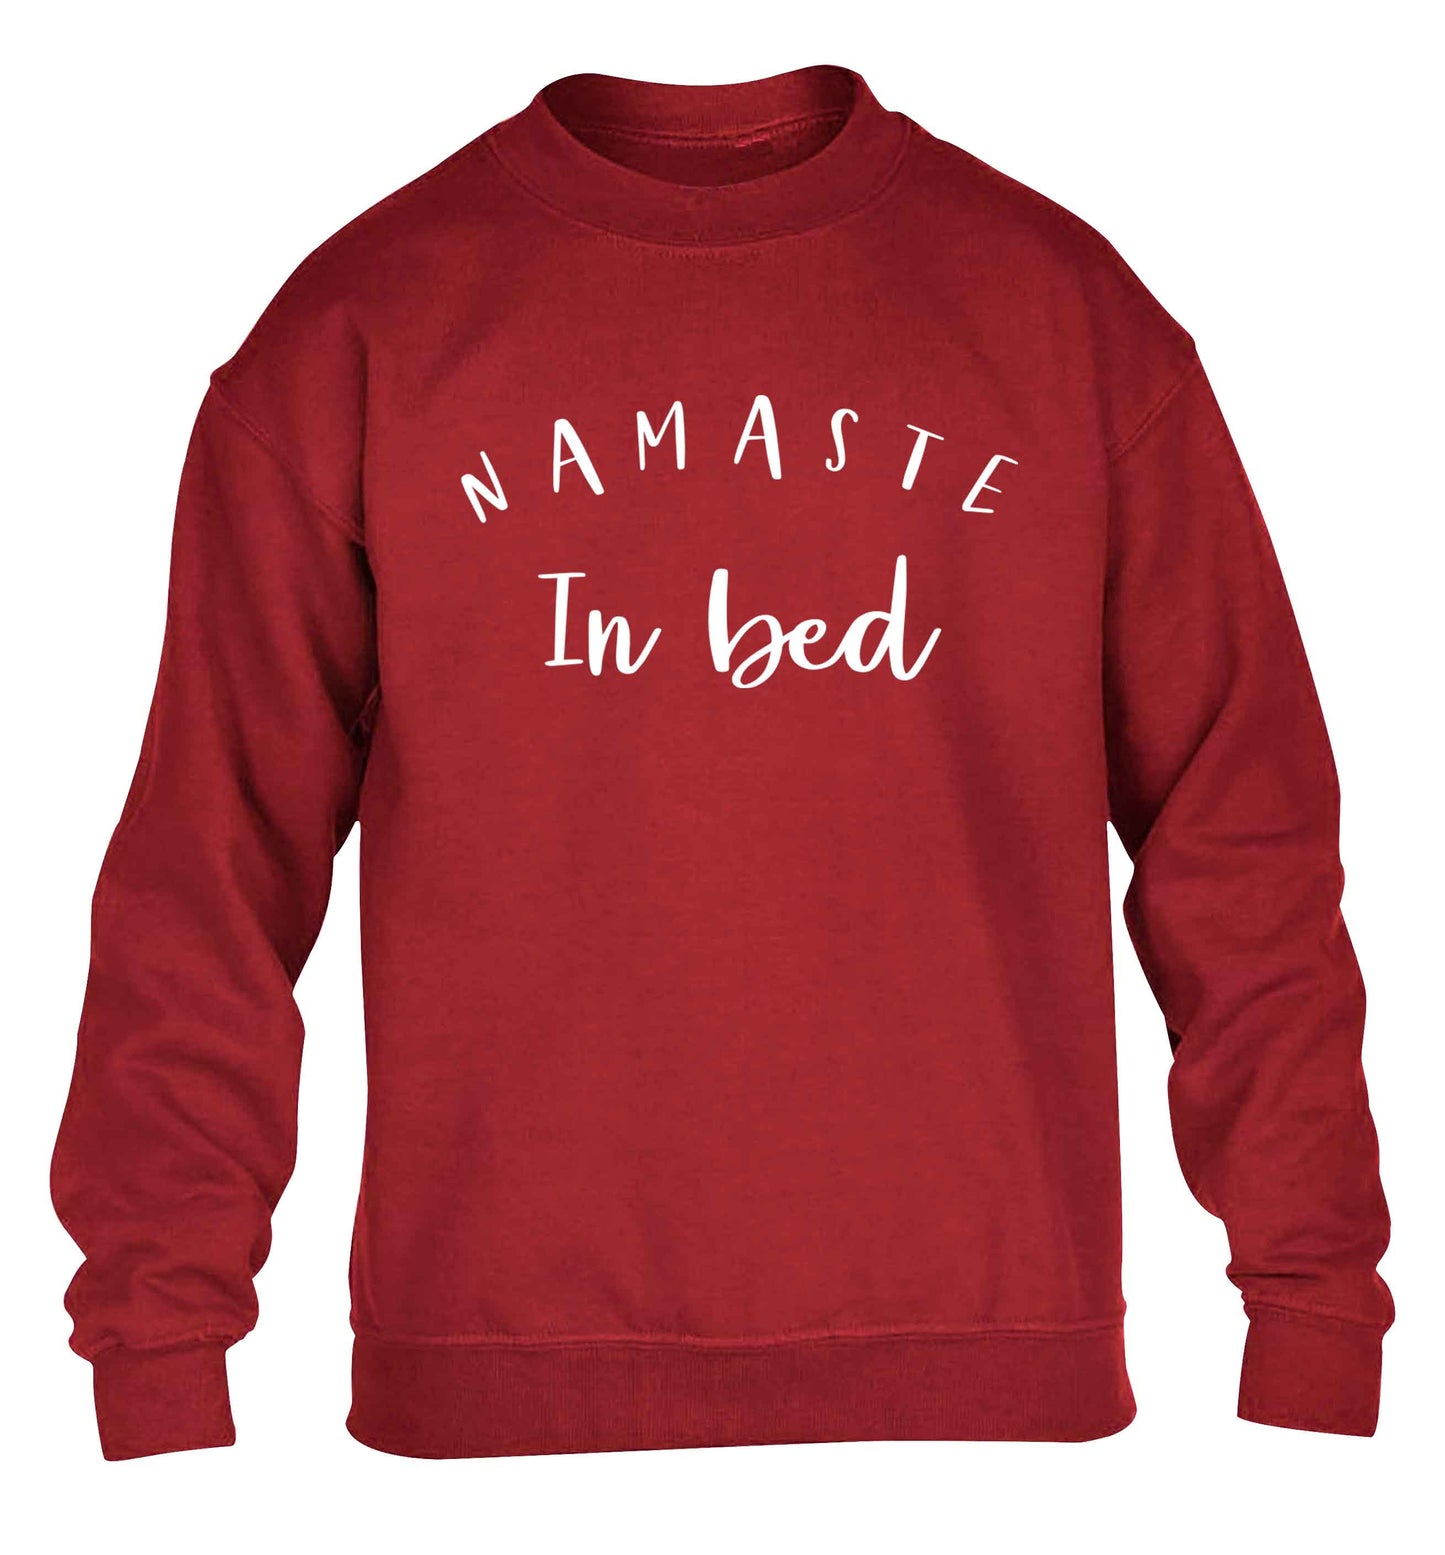 Namaste in bed children's grey sweater 12-13 Years